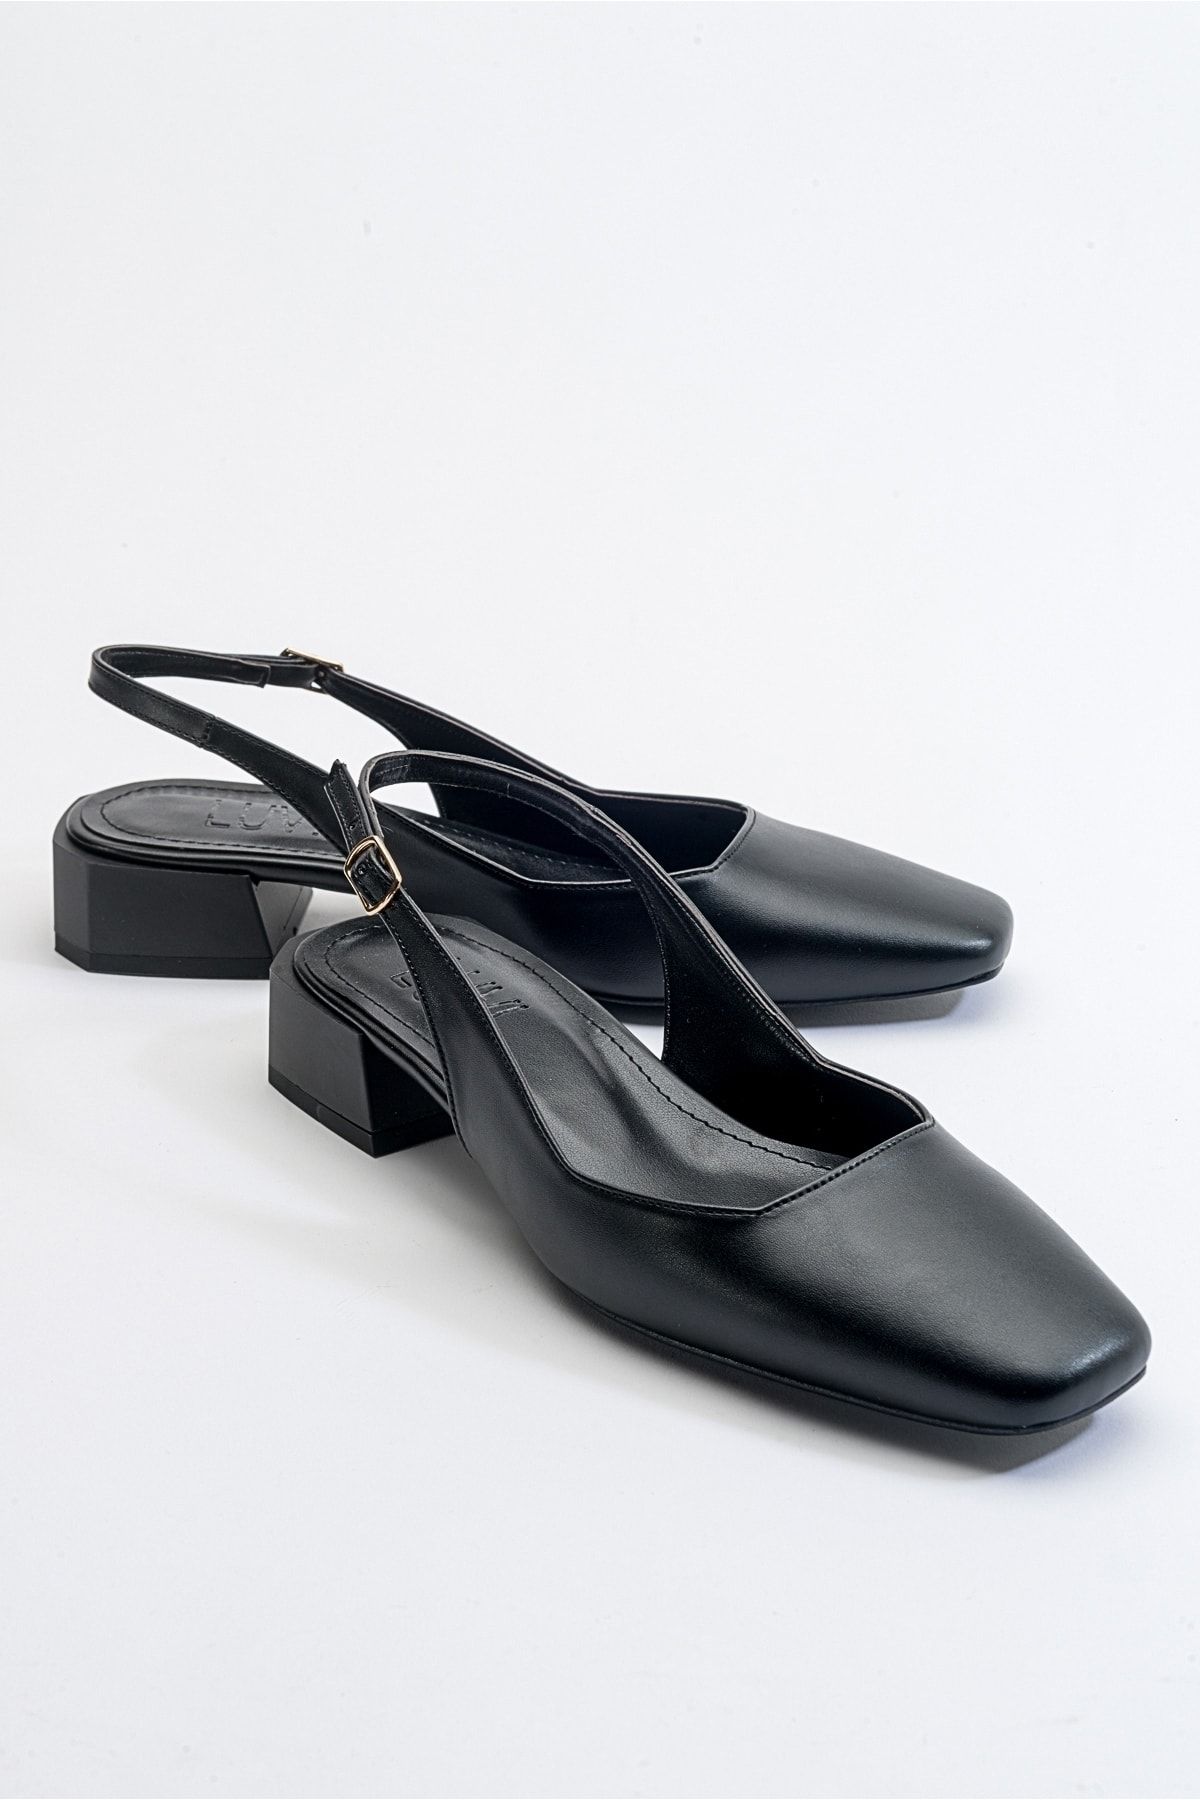 luvishoes State Siyah Cilt Kadın Topuklu Ayakkabı